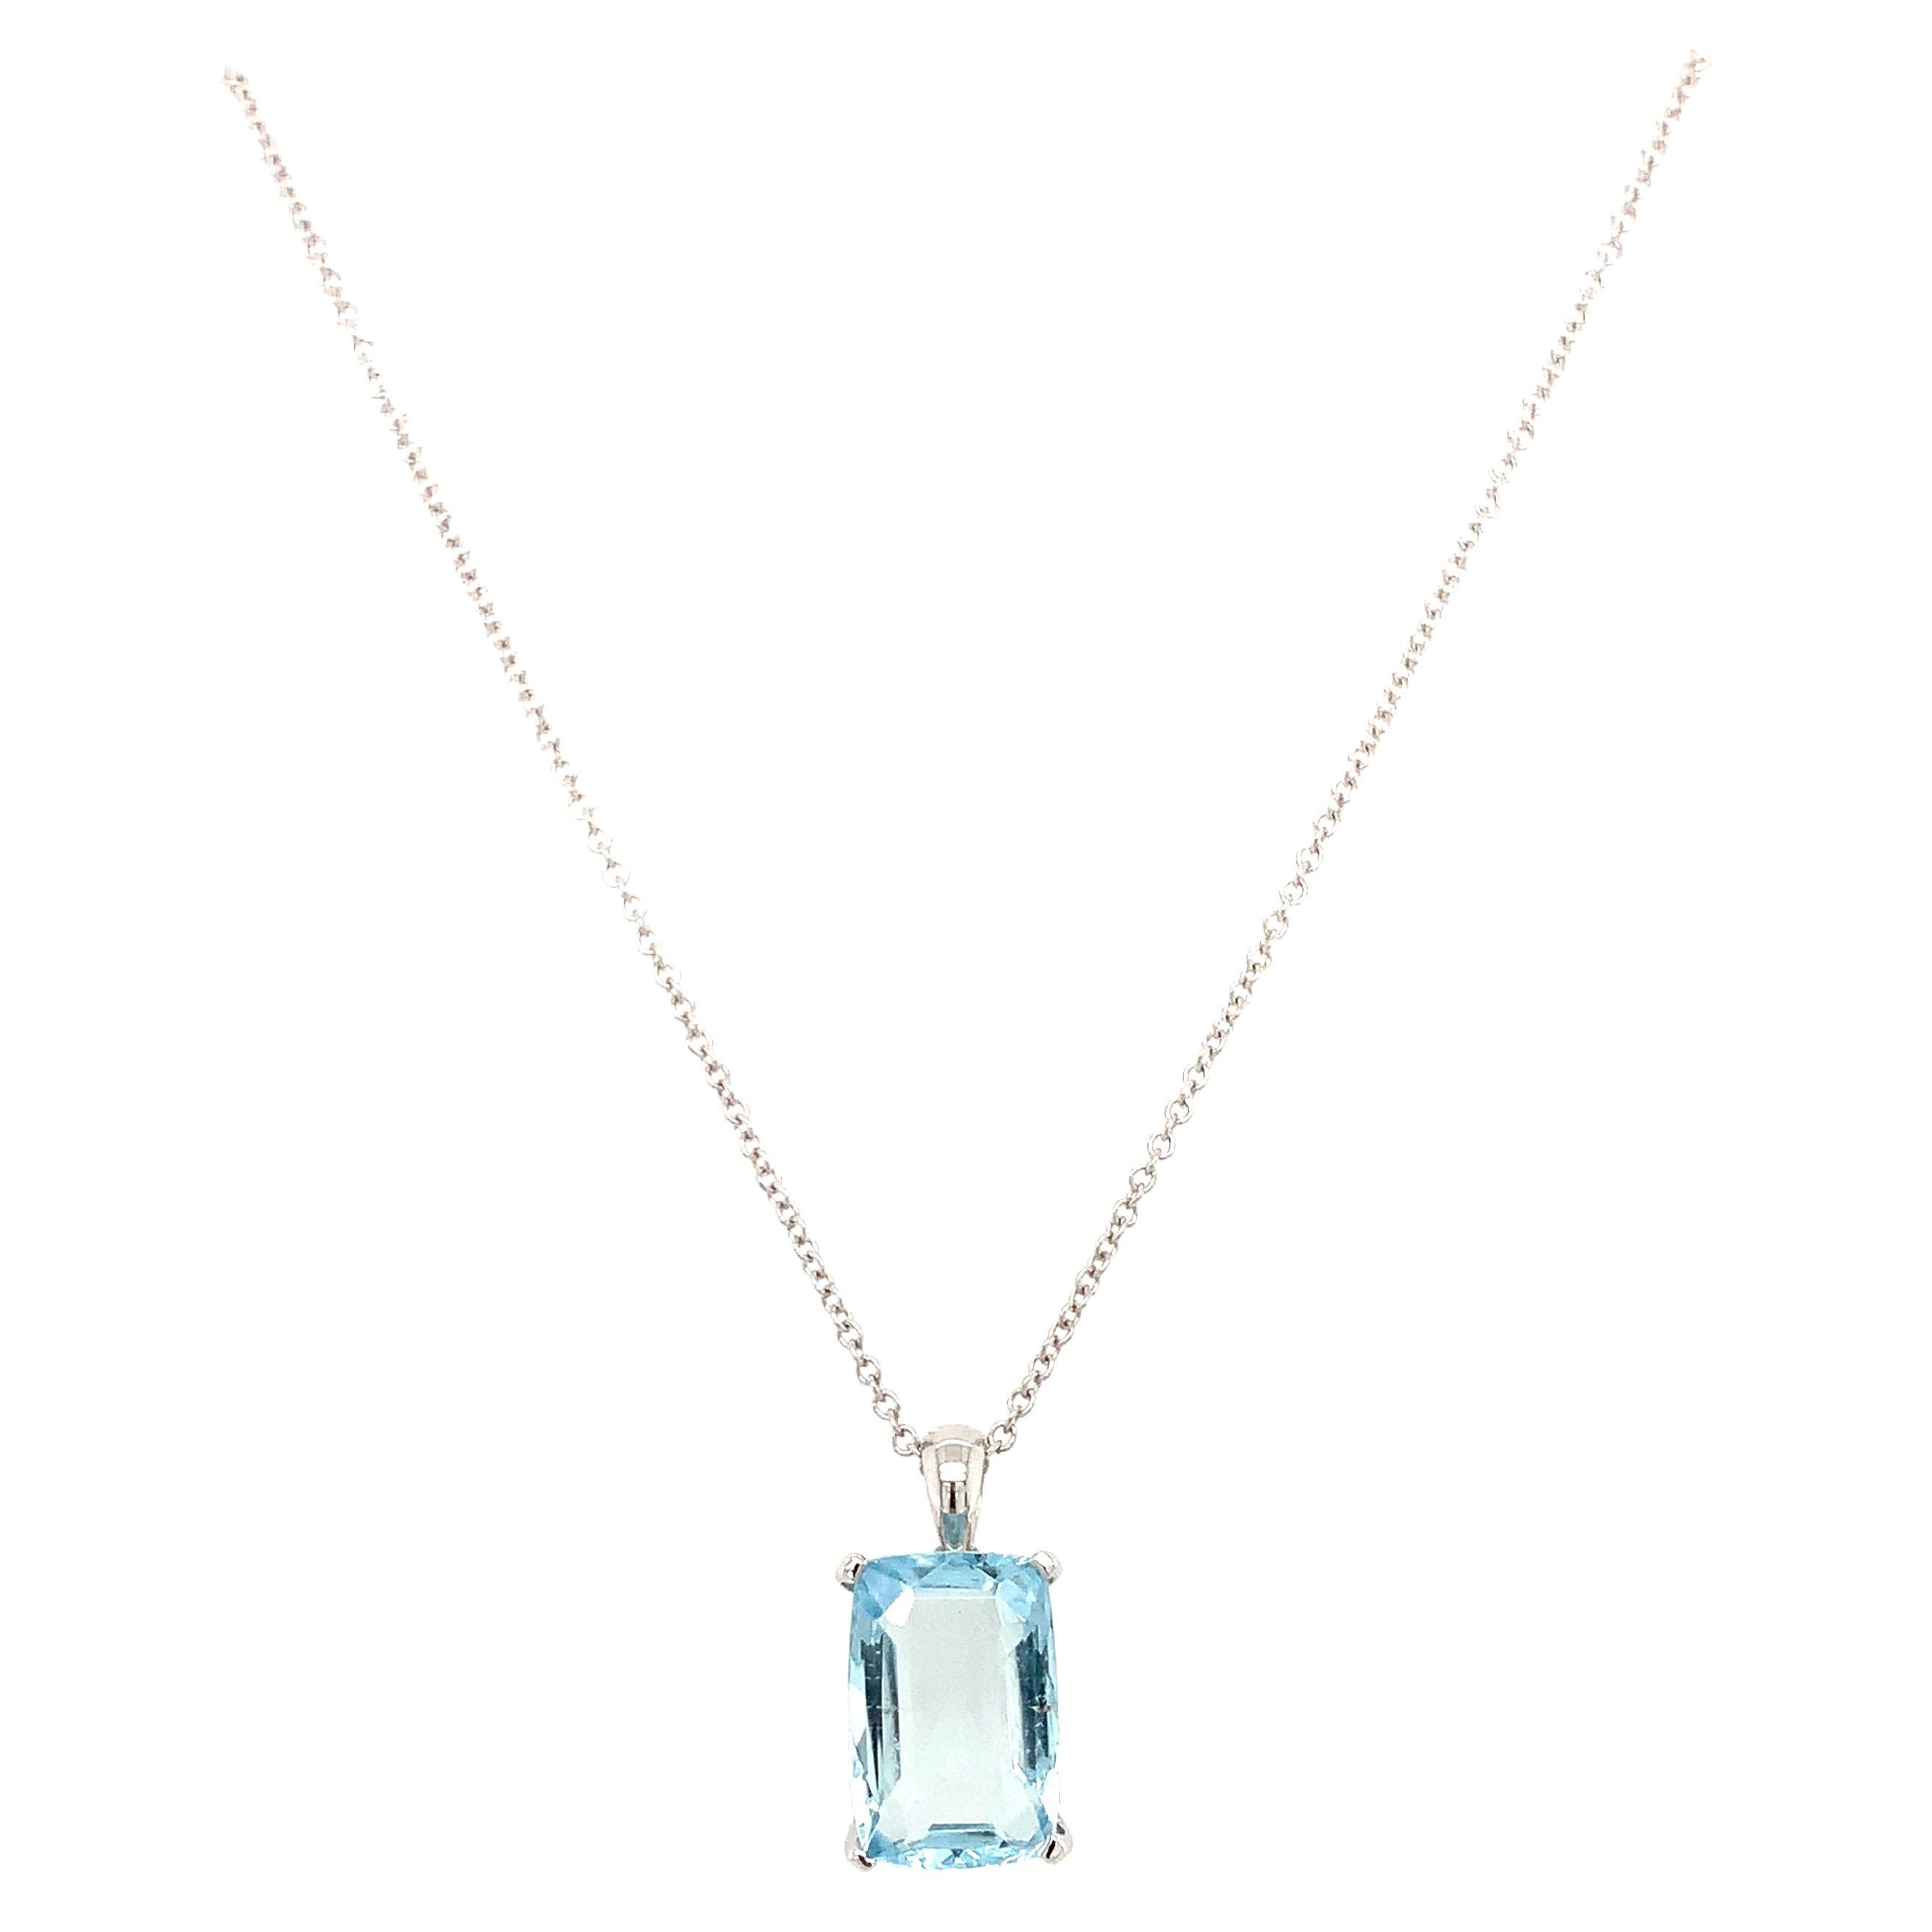 Aquamarine emerald cut solitaire pendant necklace 18k white gold For Sale